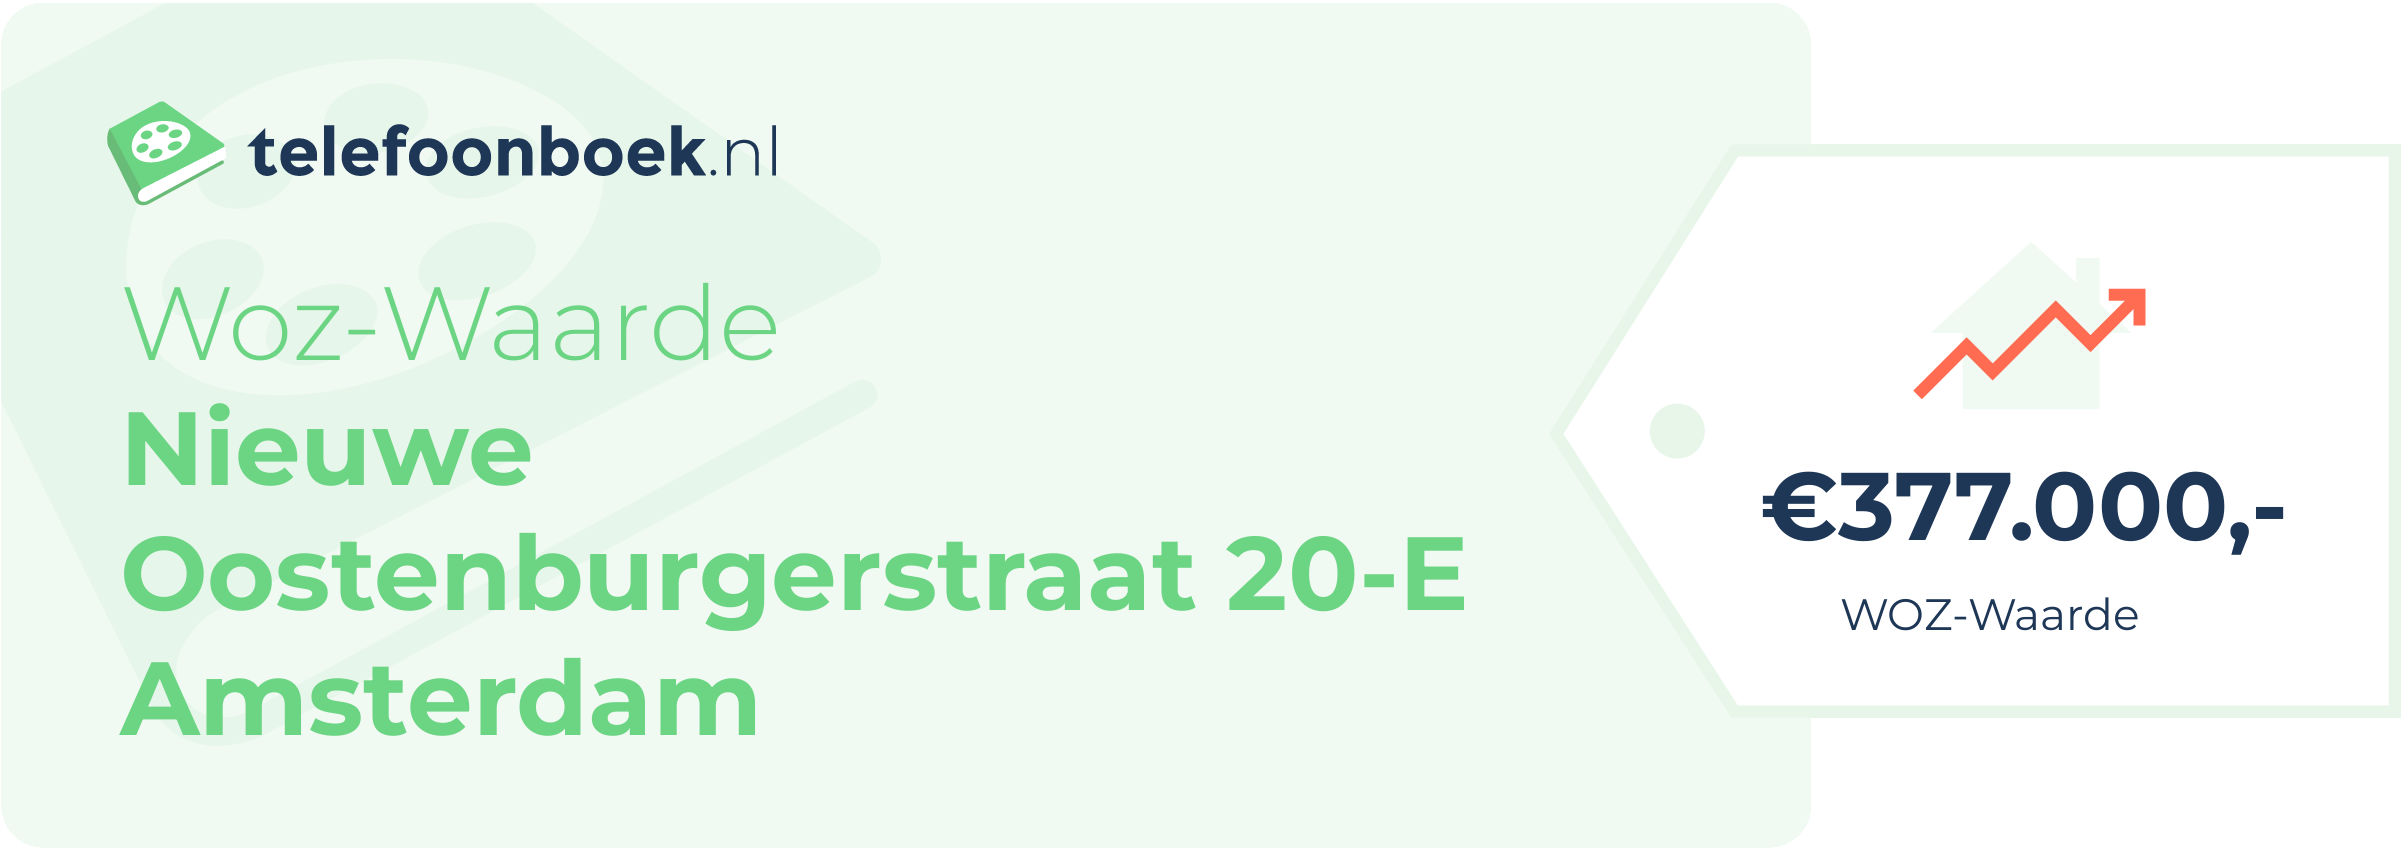 WOZ-waarde Nieuwe Oostenburgerstraat 20-E Amsterdam